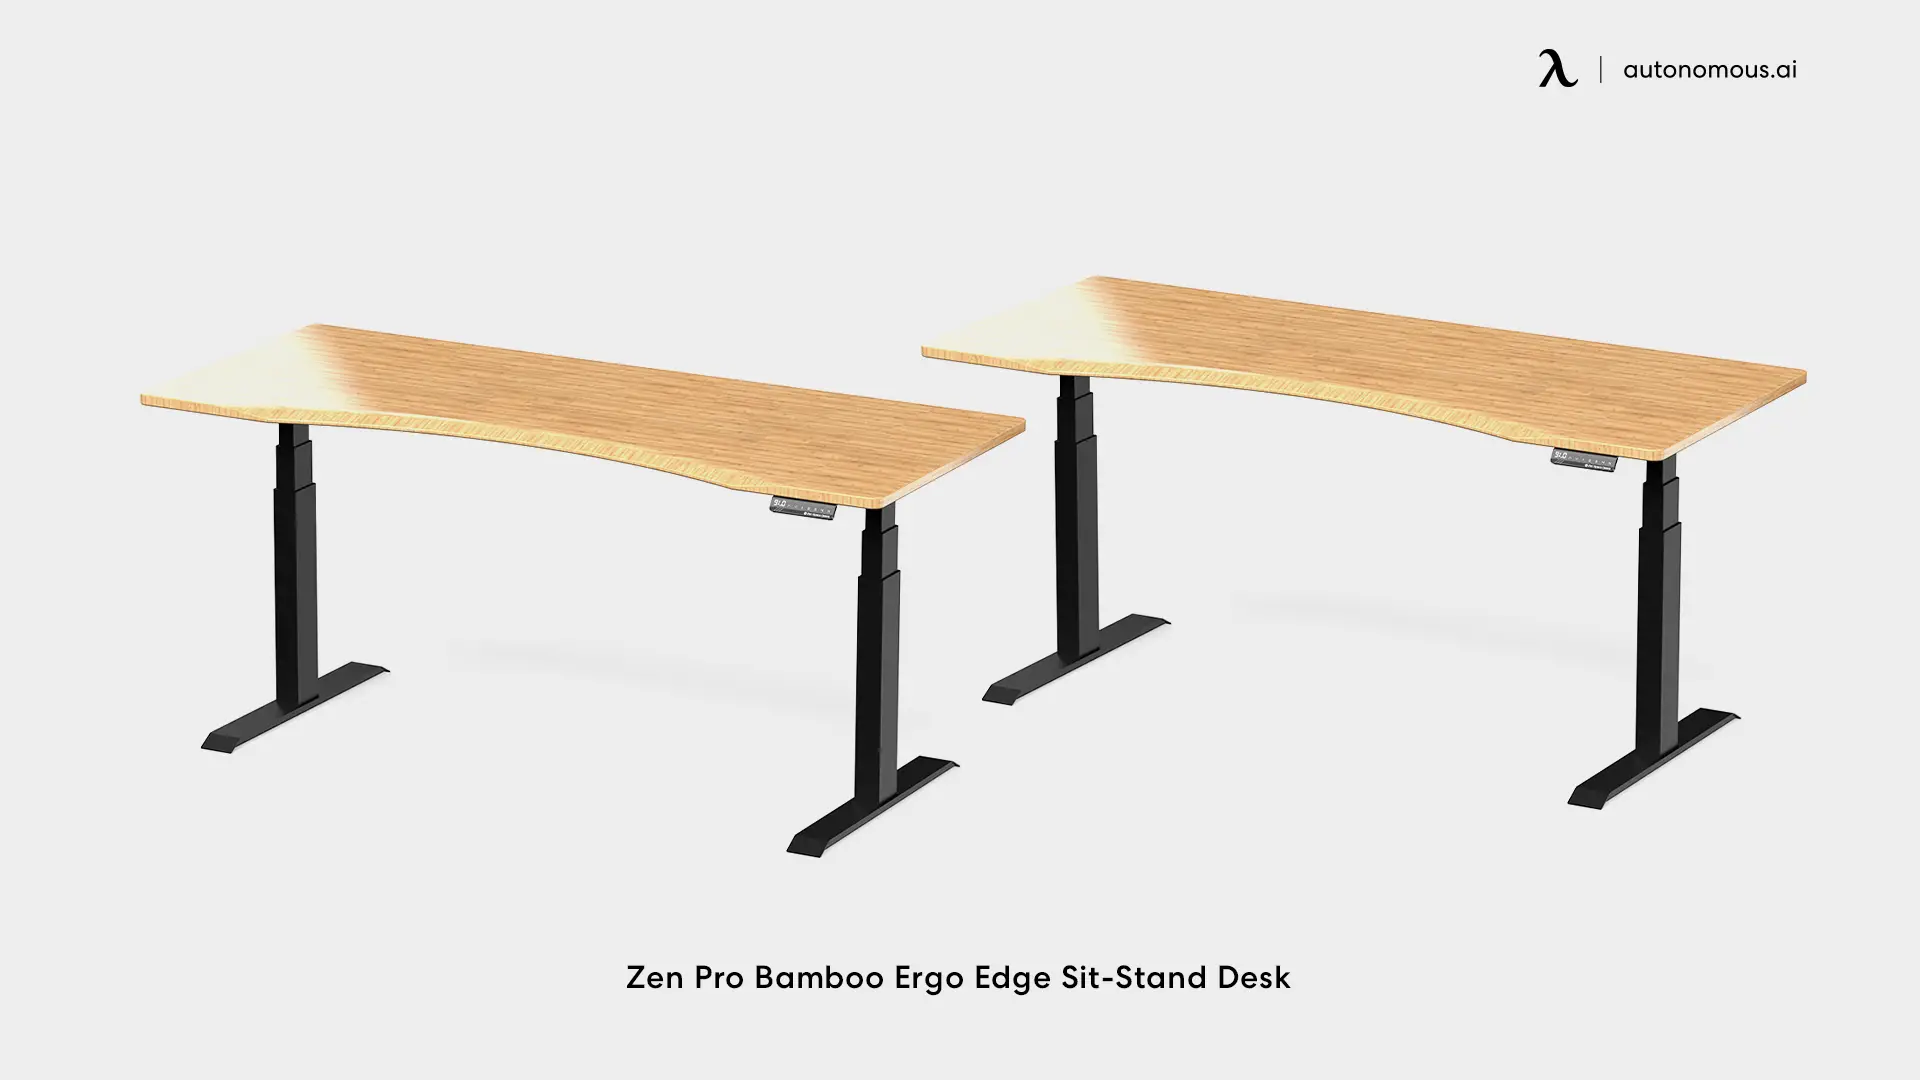 Zen Pro Bamboo Ergo Edge Sit-Stand Desk